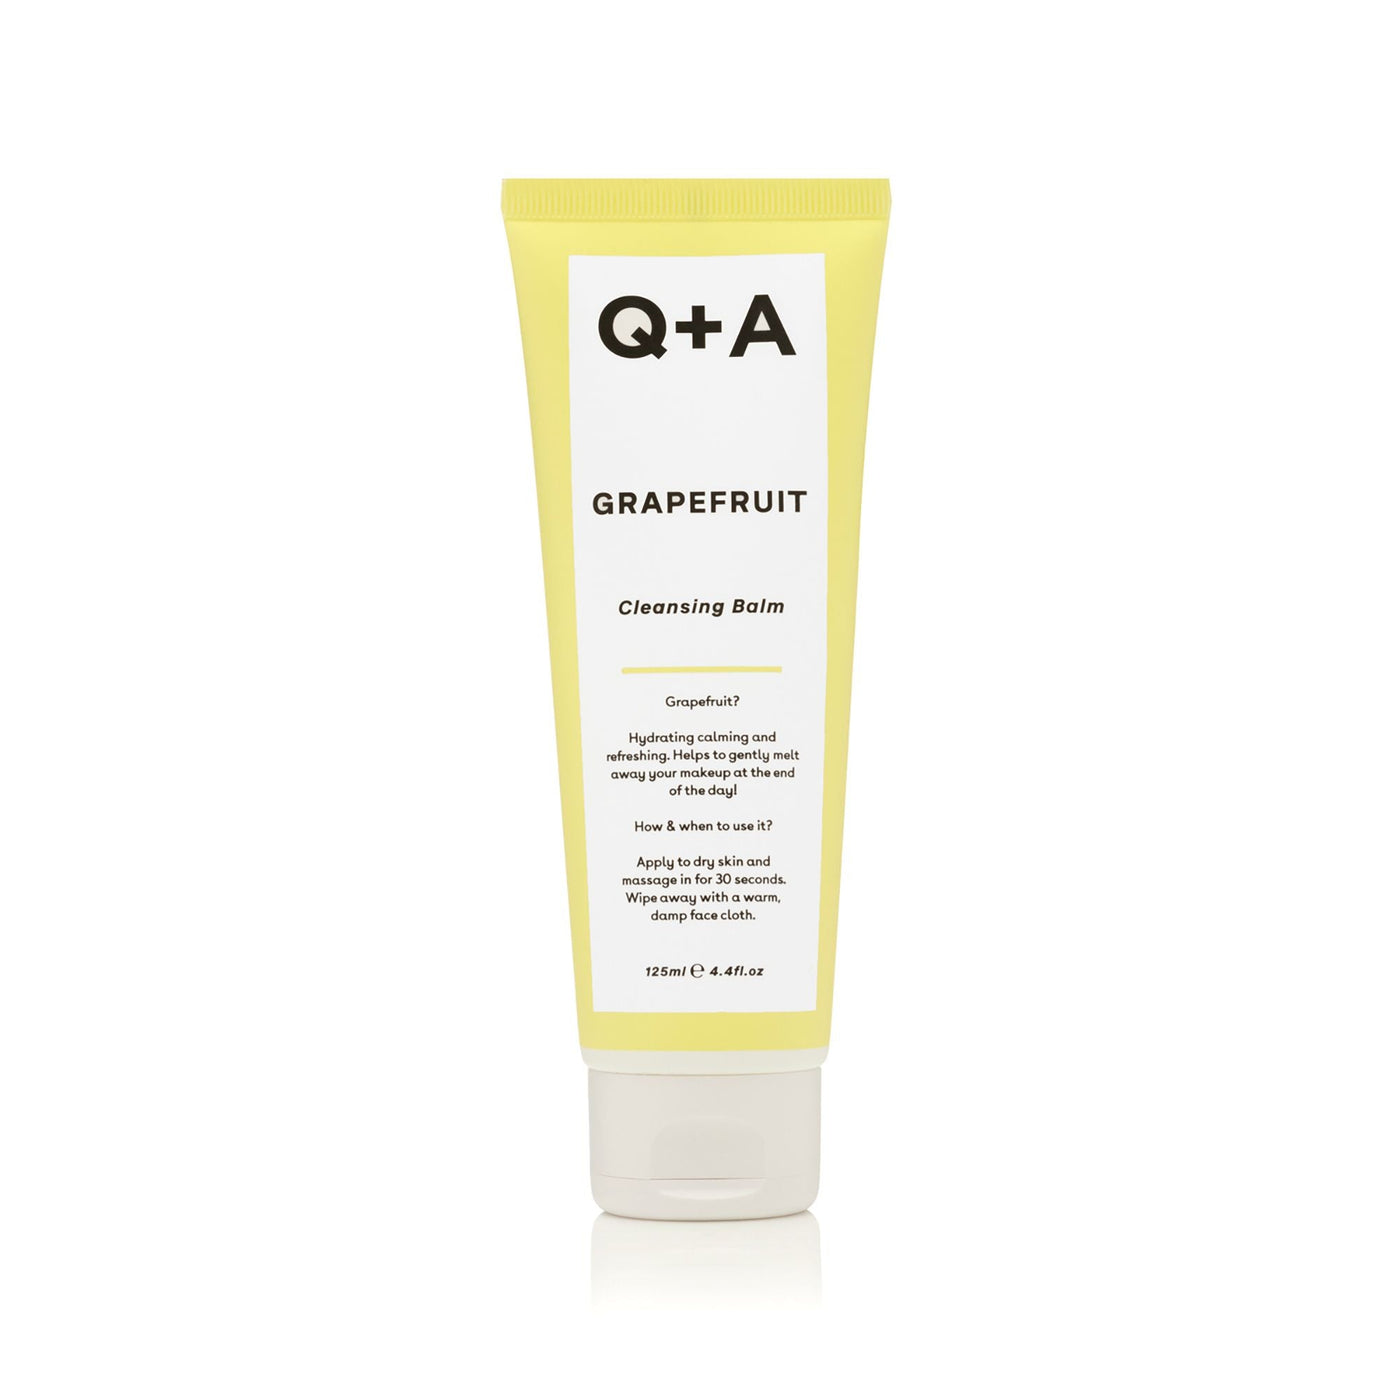 Q+A - Grapefruit Cleansing Balm